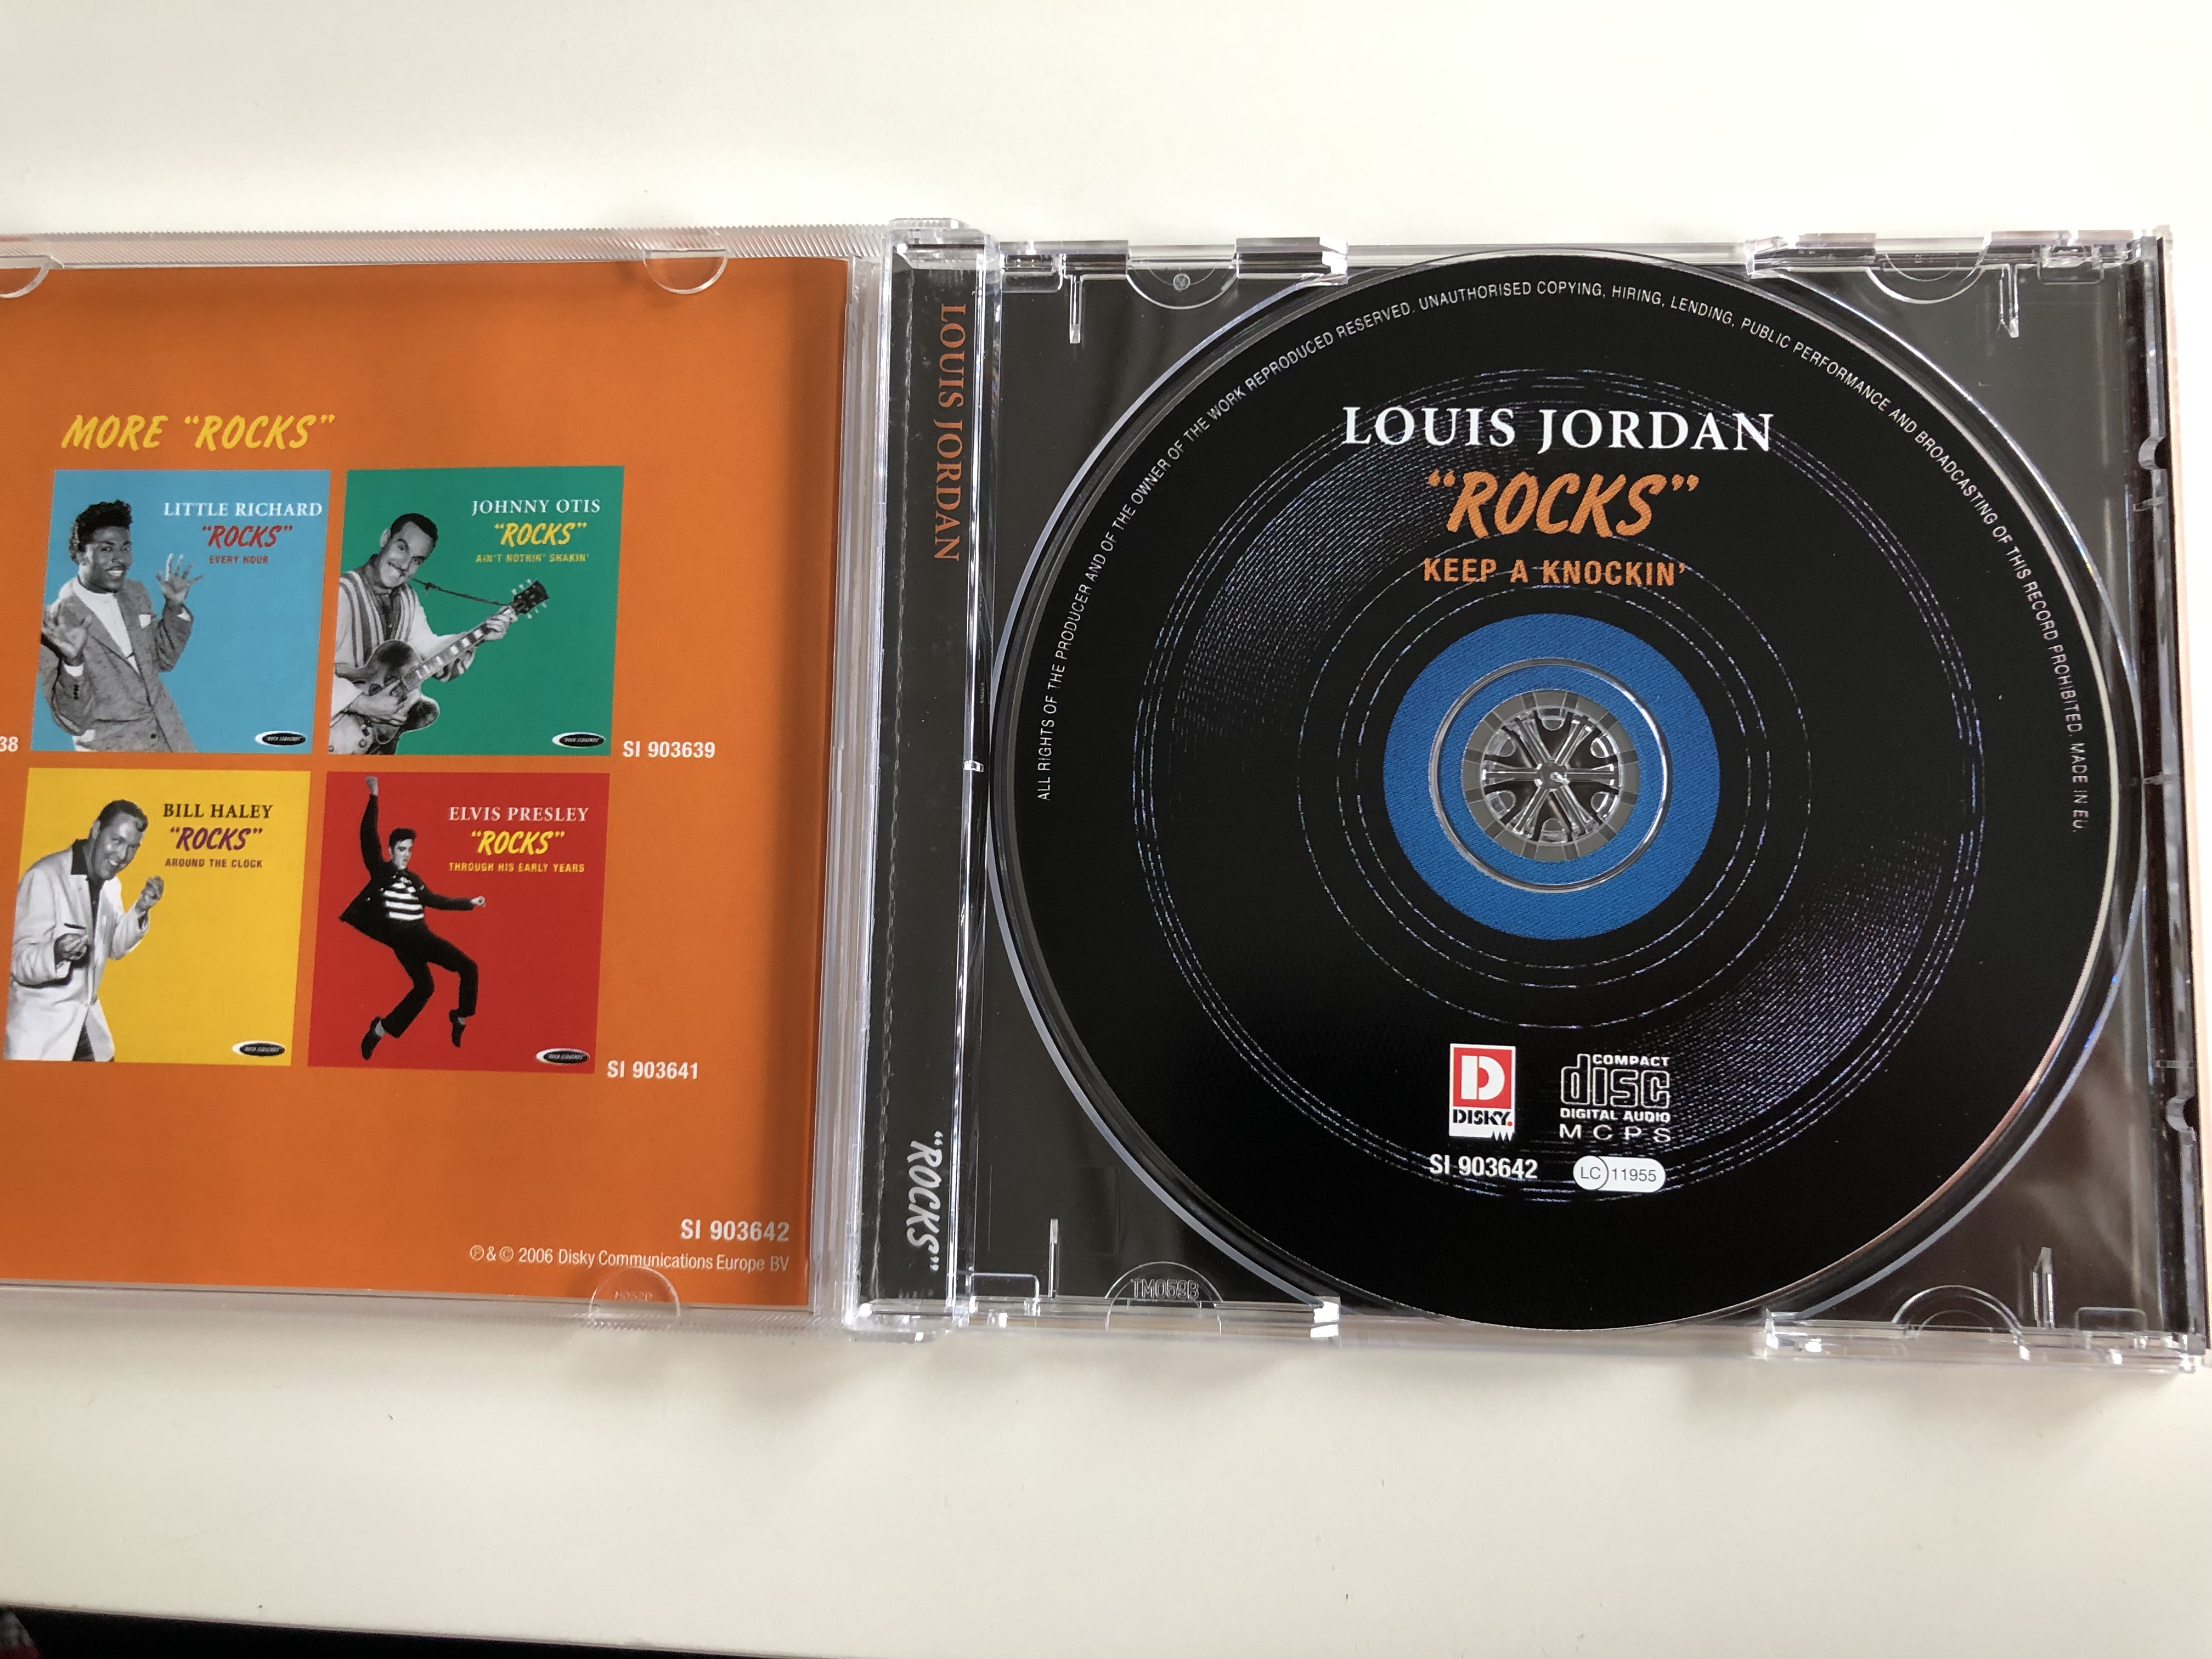 louis-jordan-rocks-keep-a-knockin-original-artist-original-songs-audio-cd-2006-si-903642-disky-2-.jpg